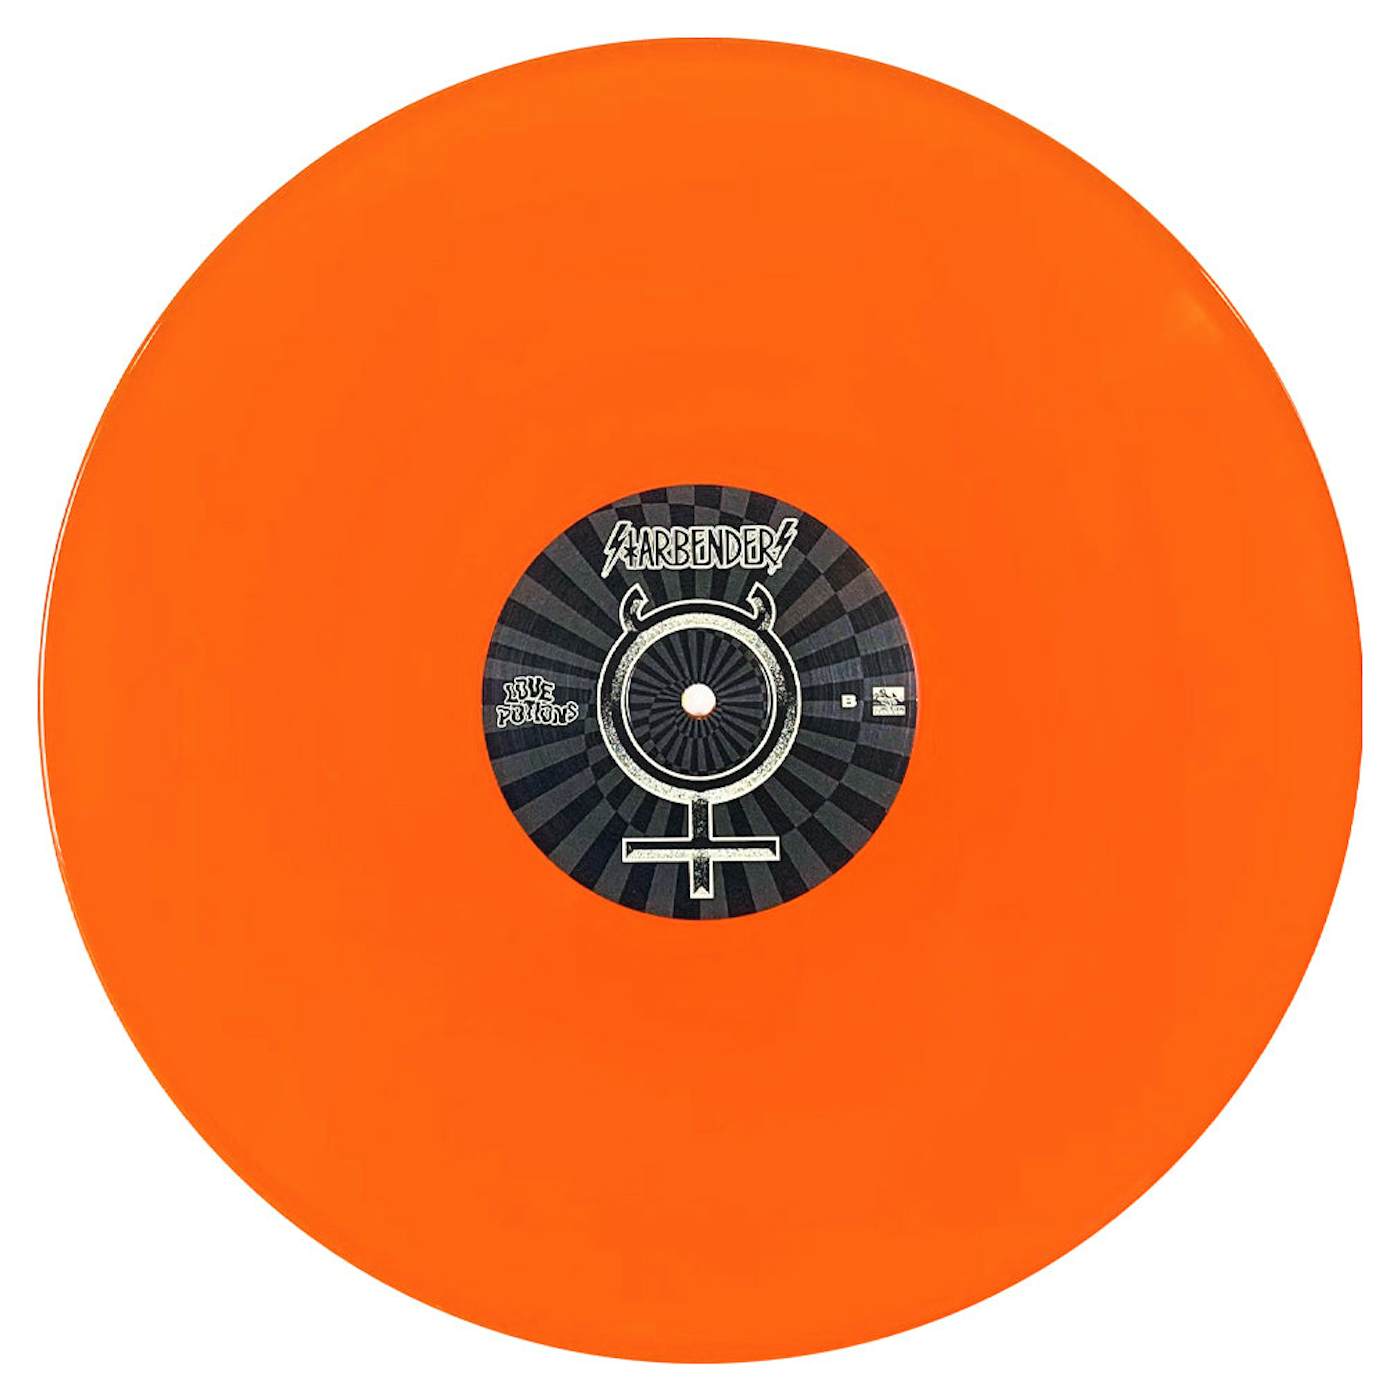 Starbenders - 'Love Potions' 2xLP 12” Transparent Orange Crush Vinyl